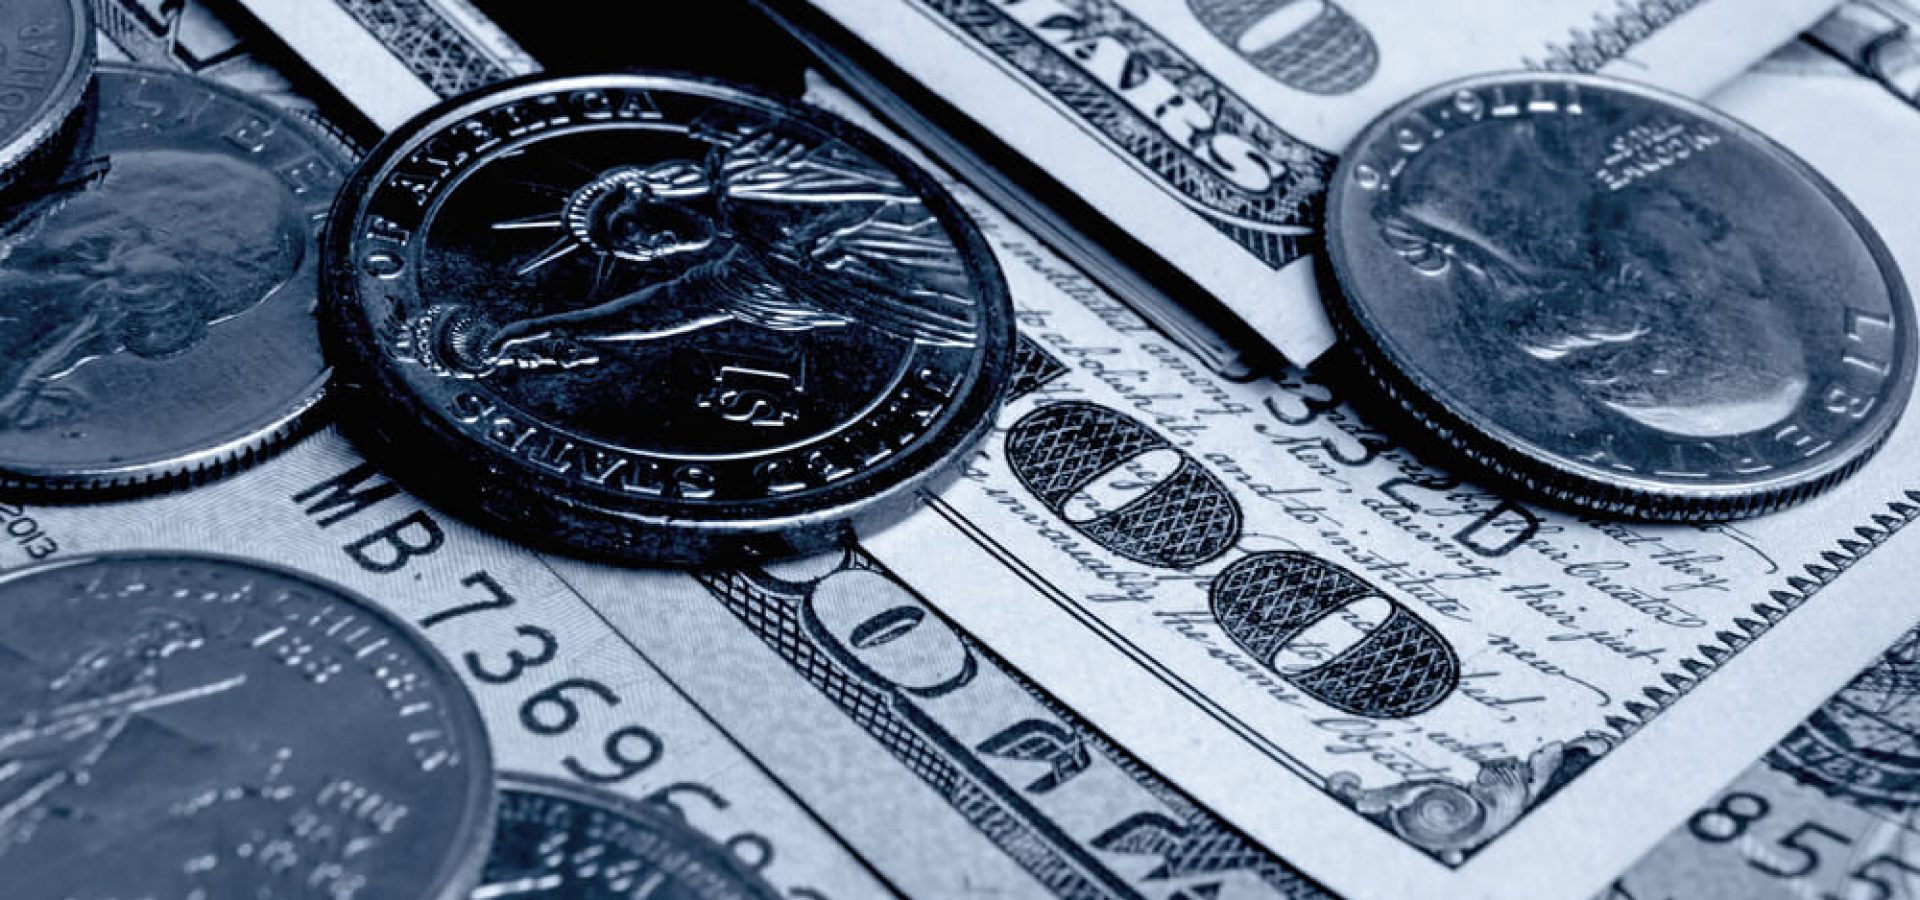 Dollar bills and coins close up shot